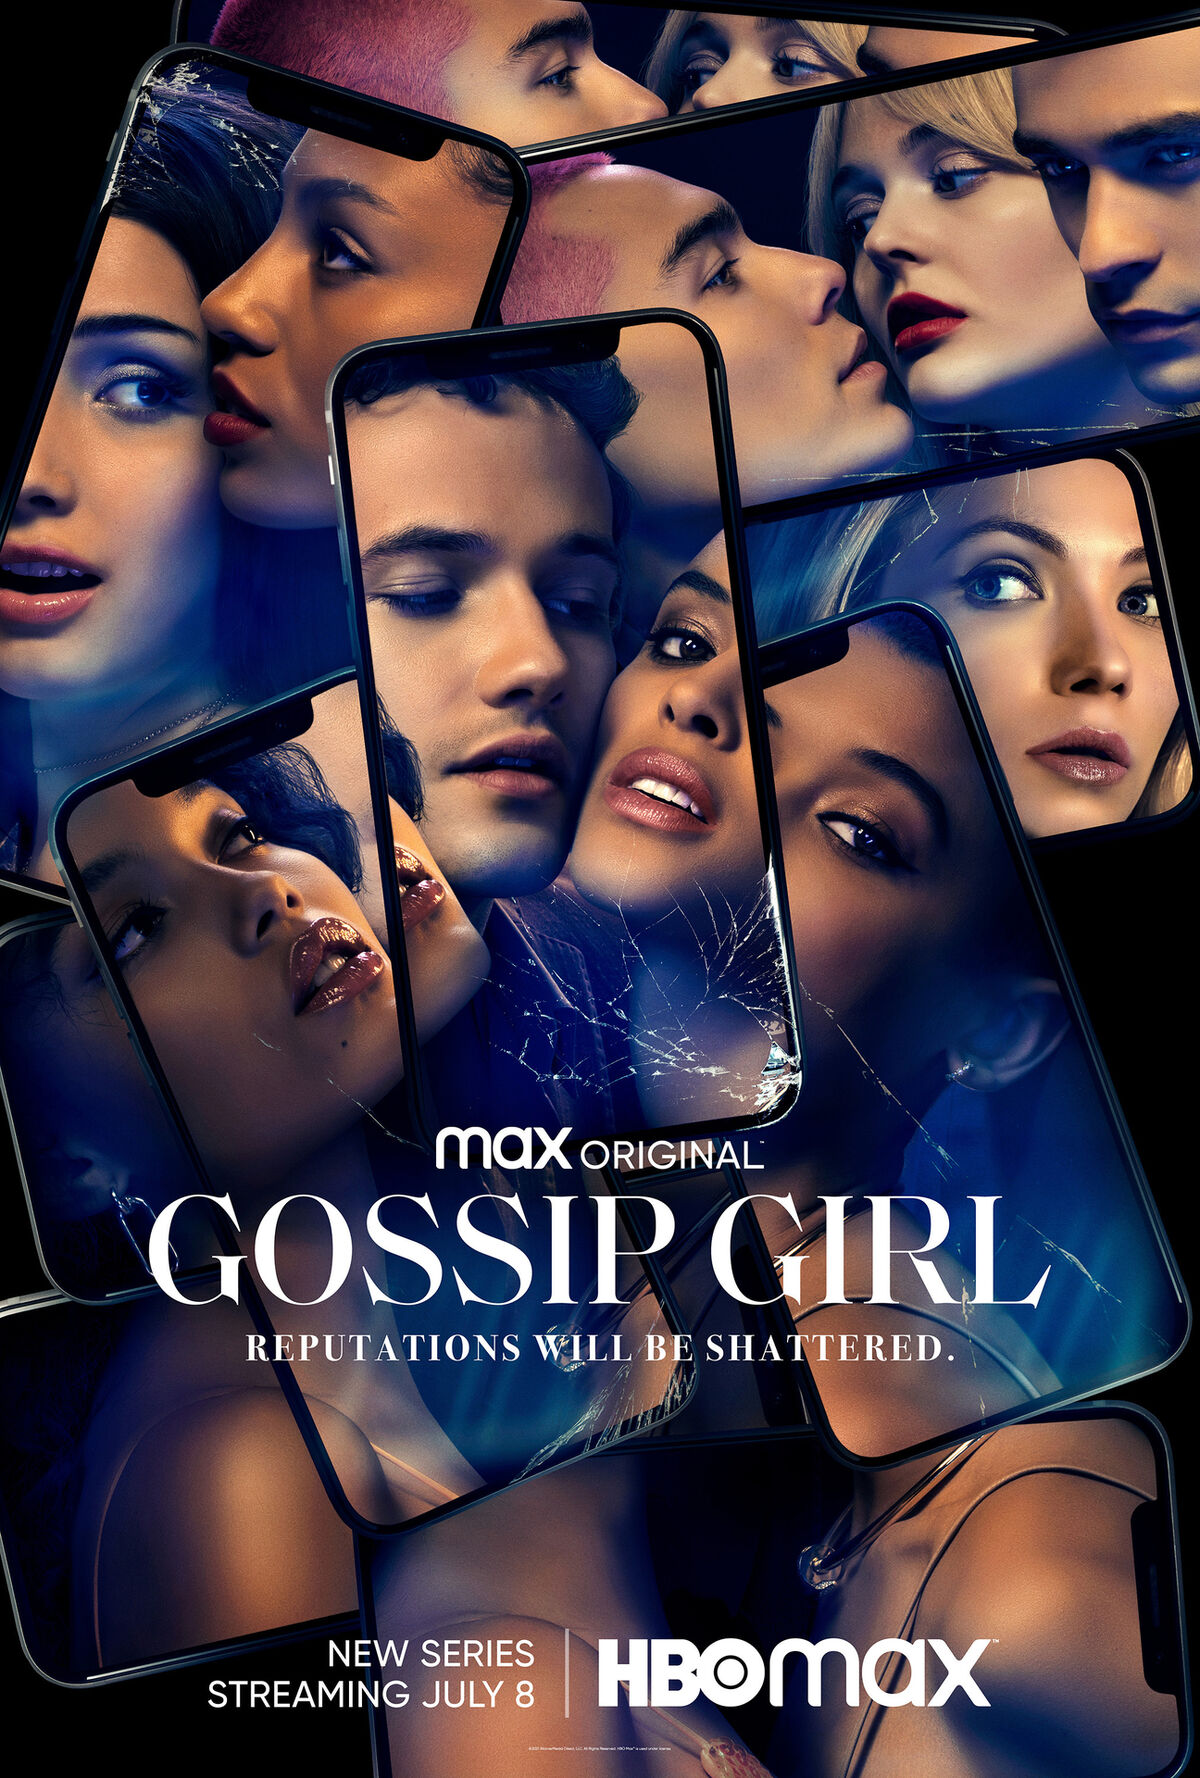 Gossip Girl (season 6) - Wikipedia